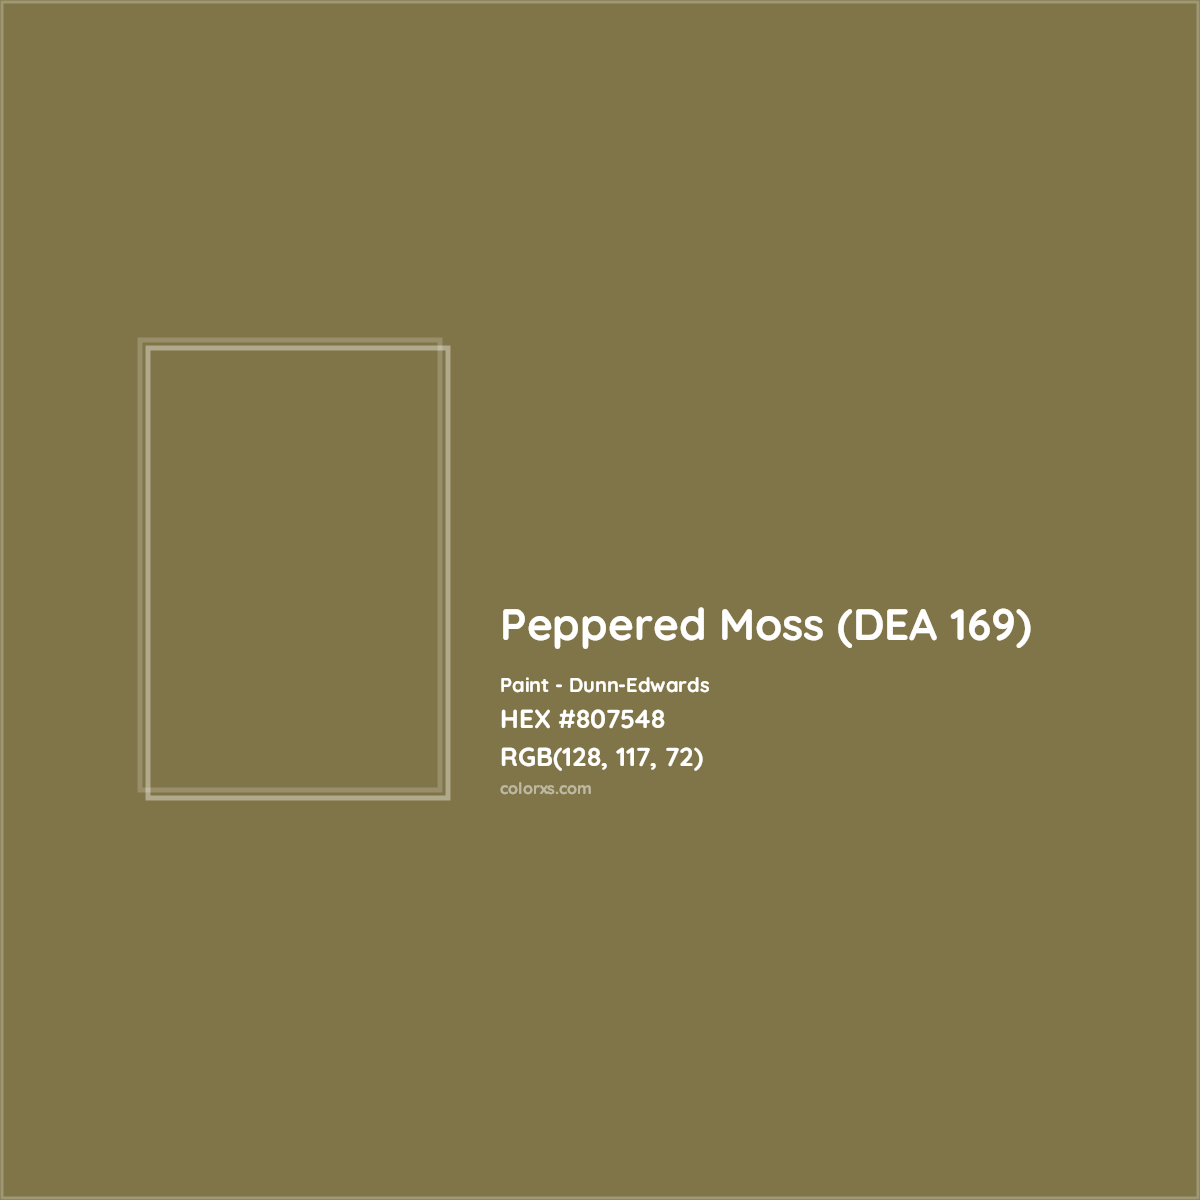 HEX #807548 Peppered Moss (DEA 169) Paint Dunn-Edwards - Color Code